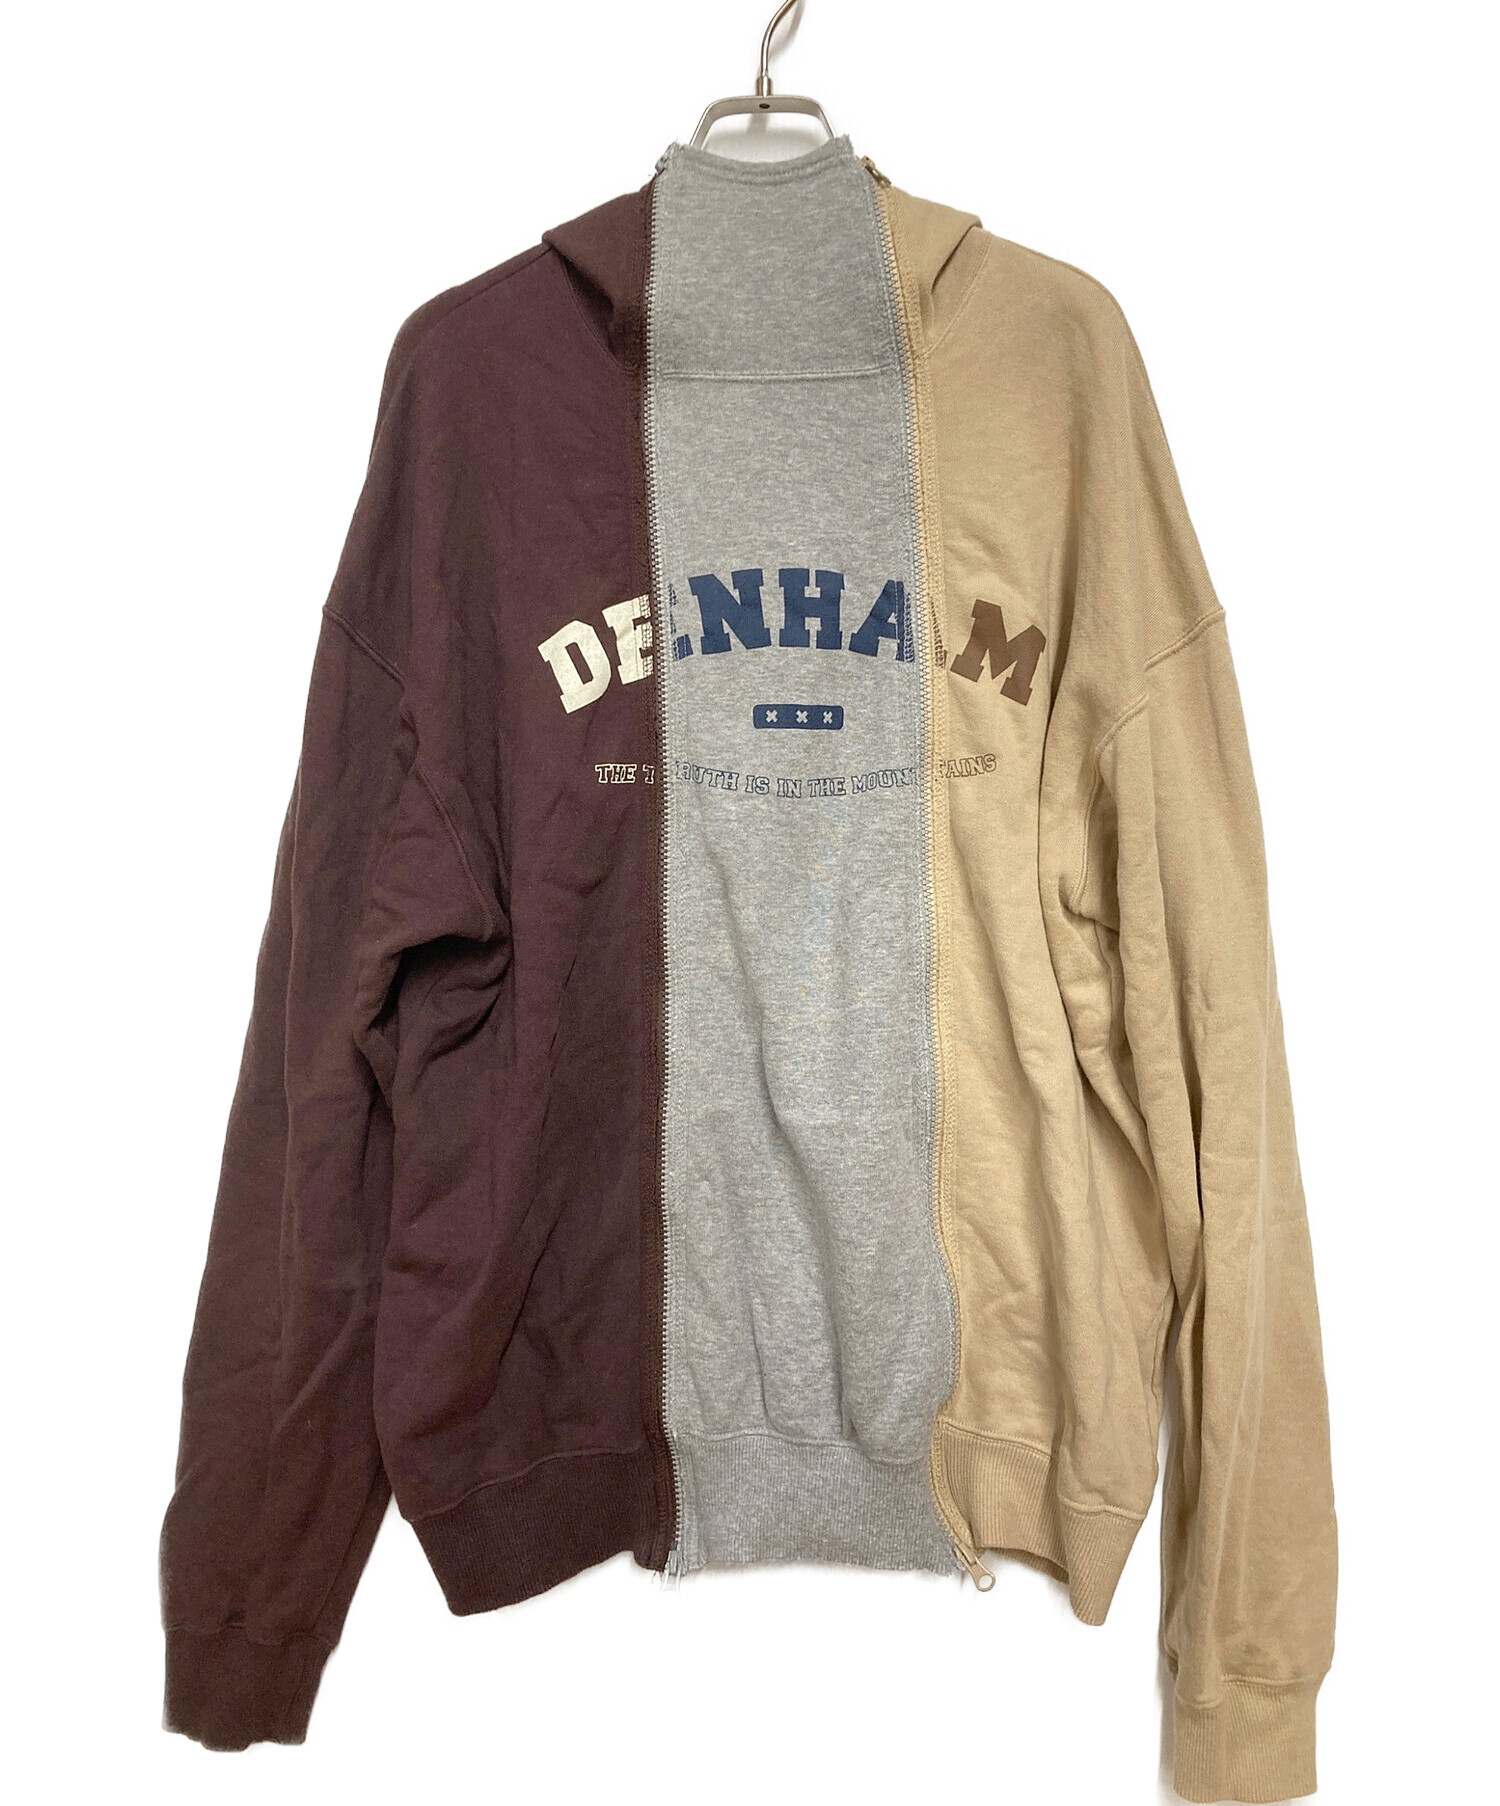 Denham (デンハム) 変形ジップパーカー ブラウン×グレー×ブラウン サイズ:XLサイズ